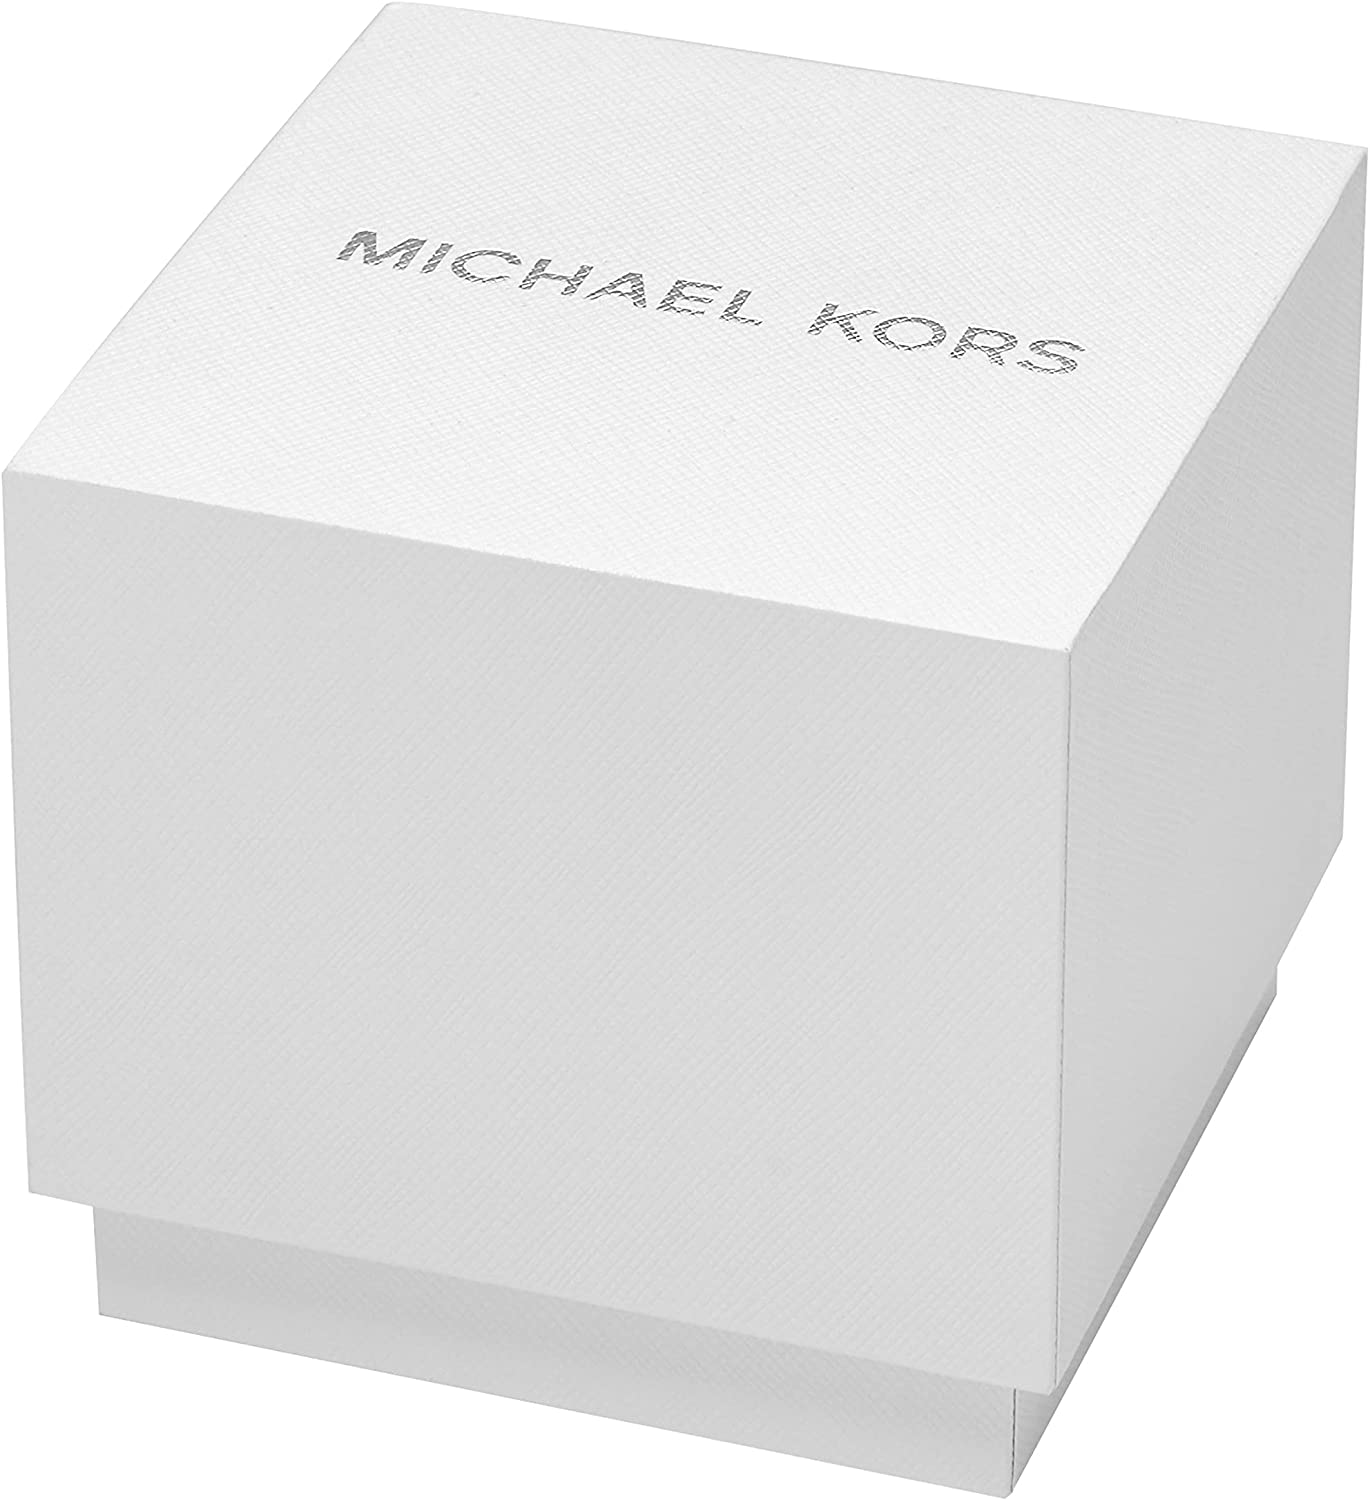 Michael Kors, Watch, MK5491, Women's